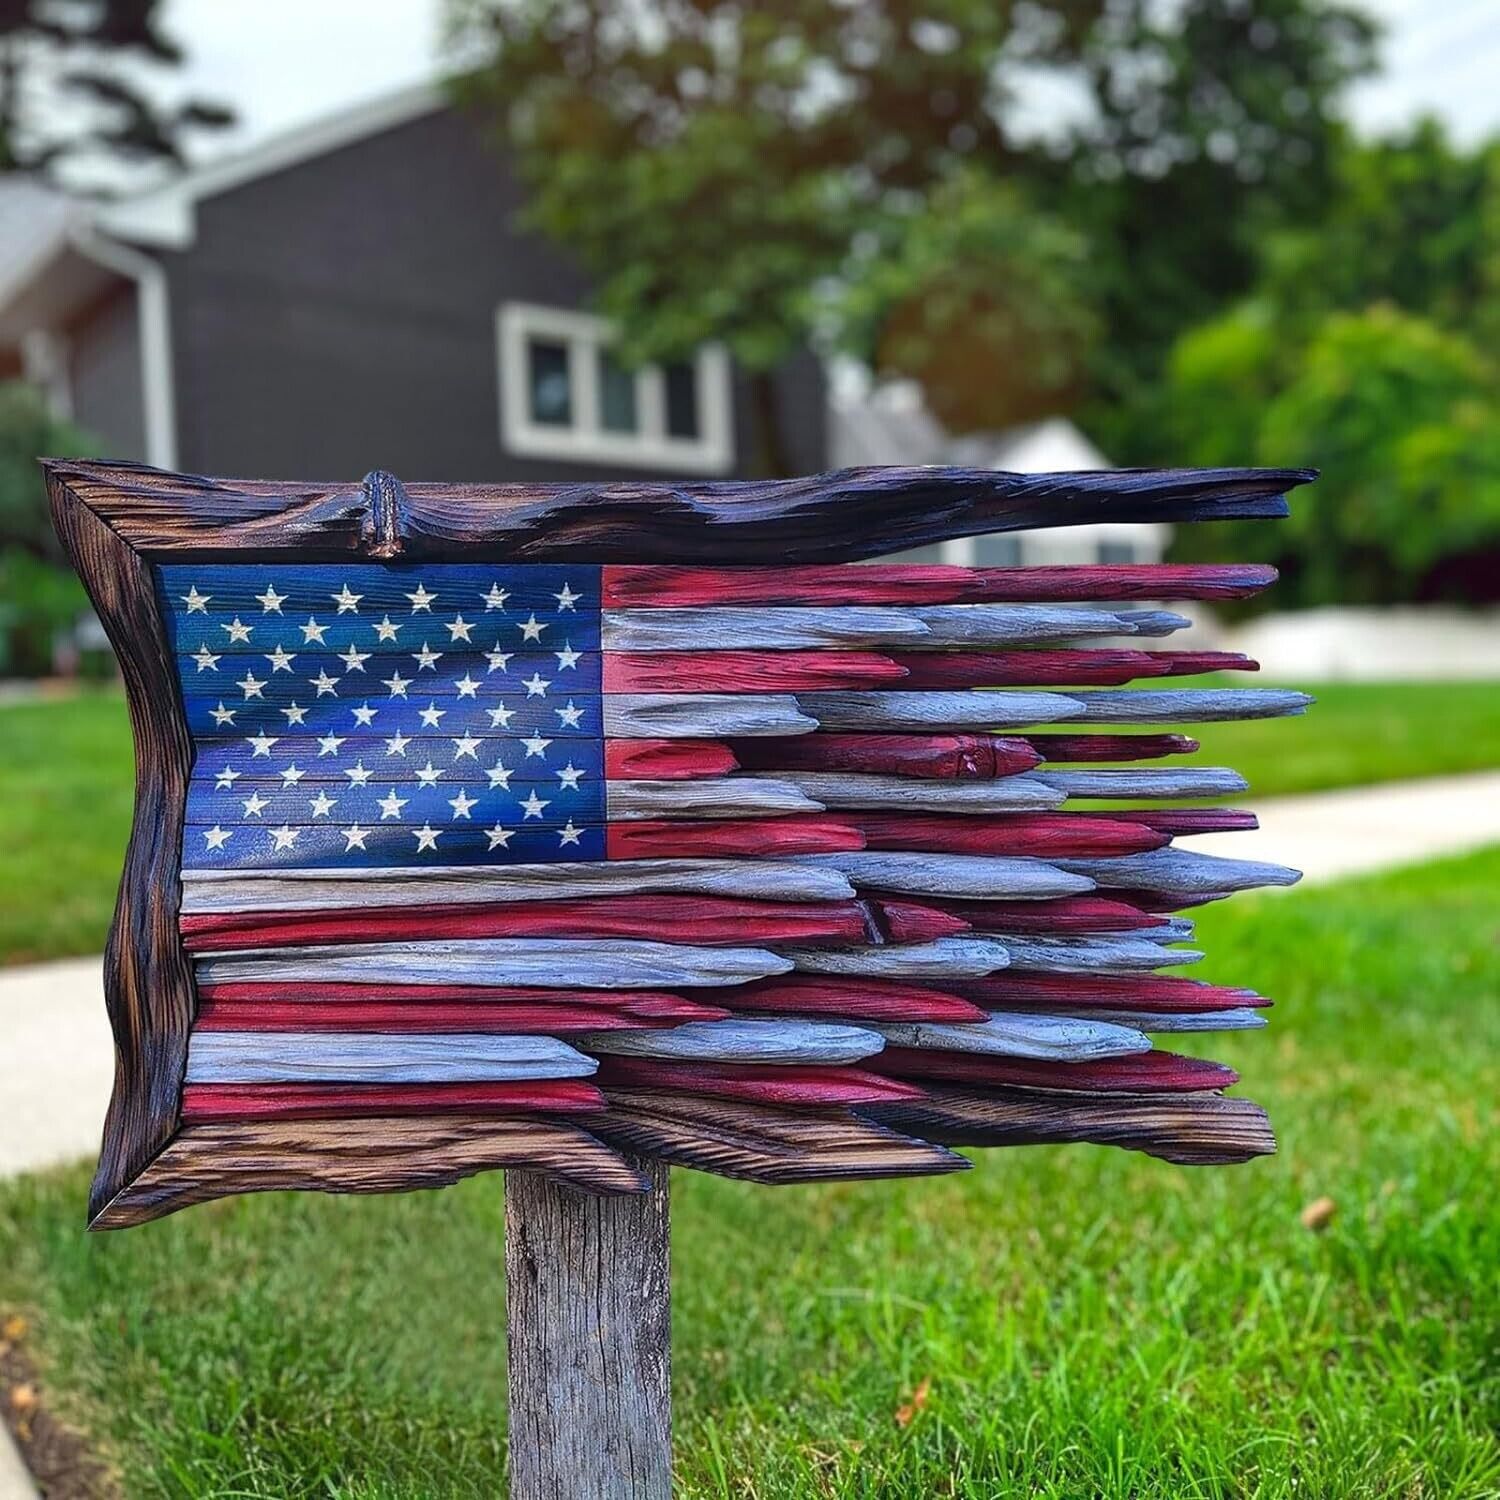 Handmade three-layer wooden three-dimensional 3D American flag decoration